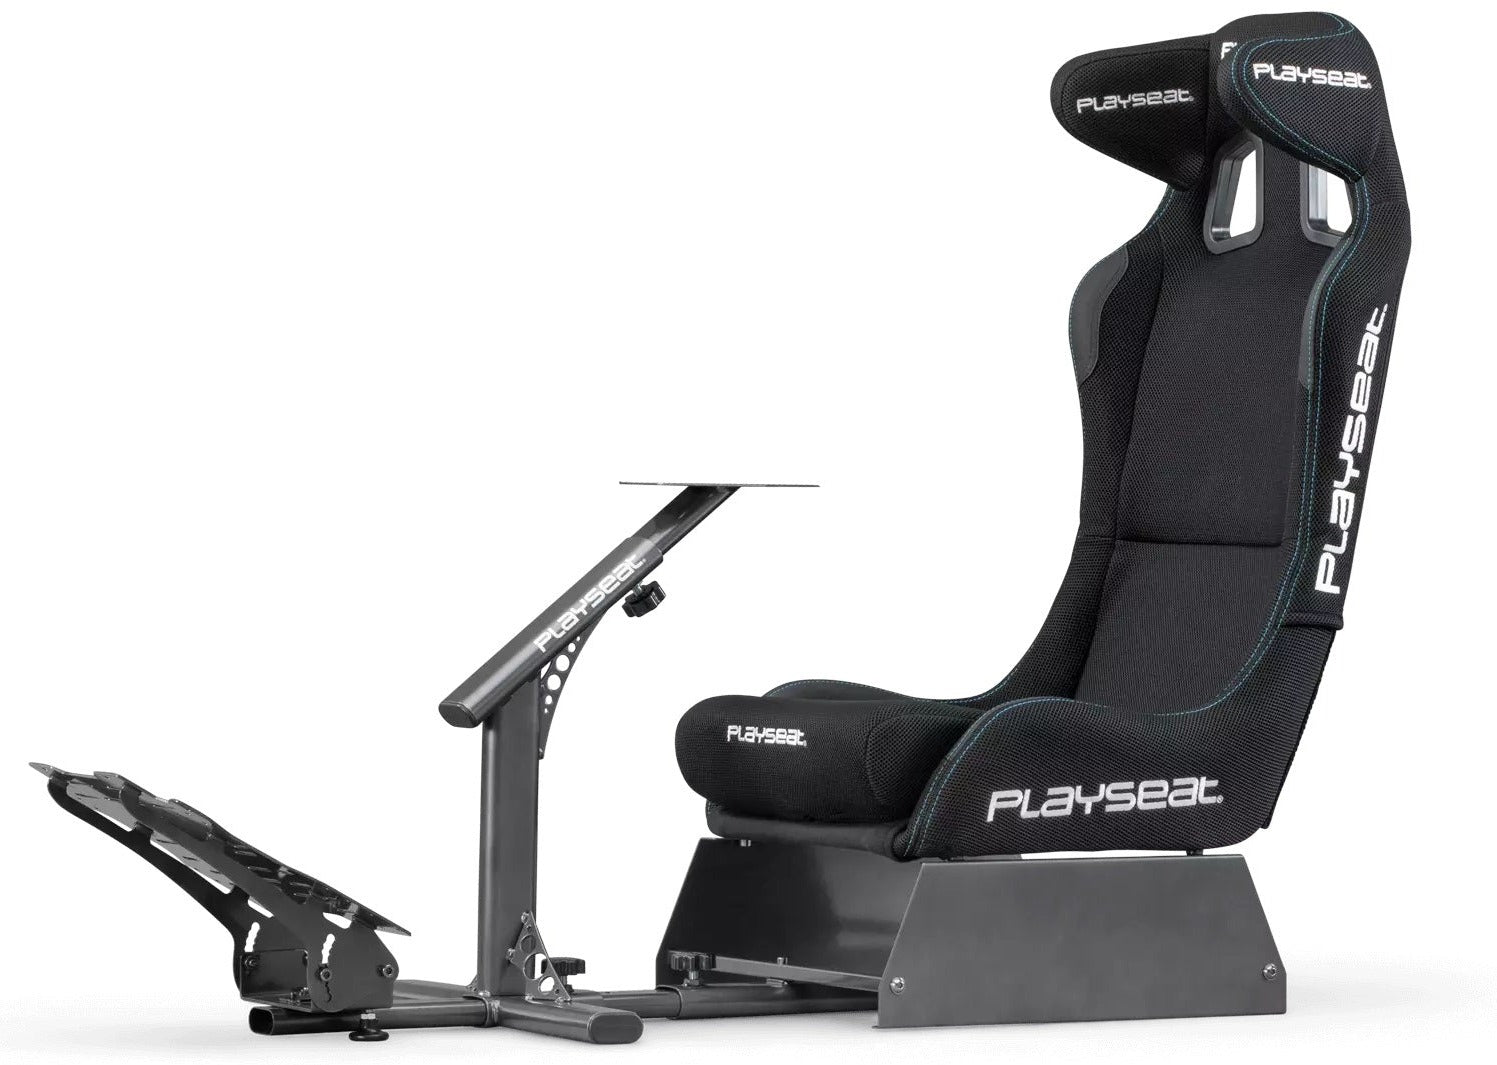 Playseat - Playseat® Air Force - Pro Racing Seat - PC - PS - XBOX